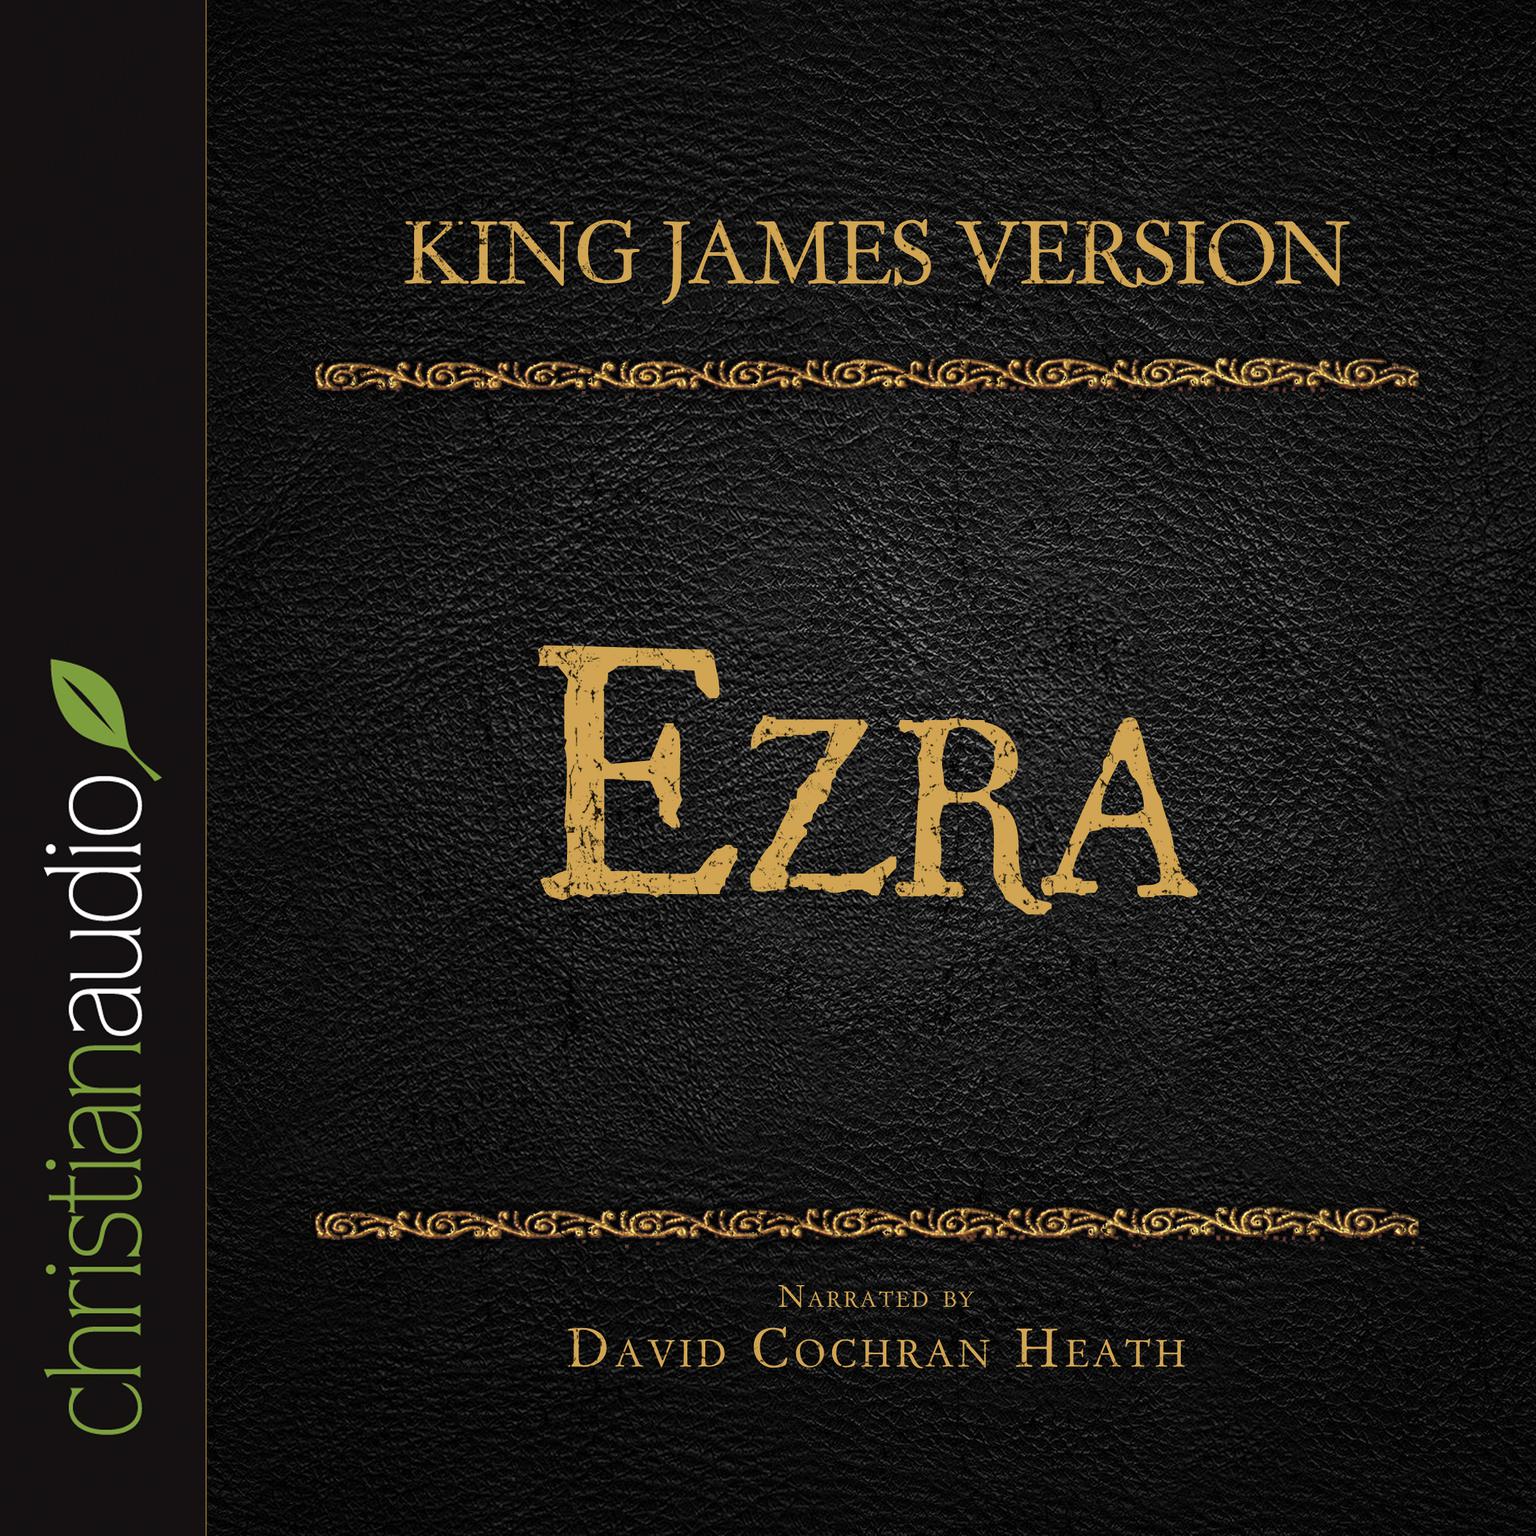 Holy Bible in Audio - King James Version: Ezra Audiobook, by David Cochran Heath